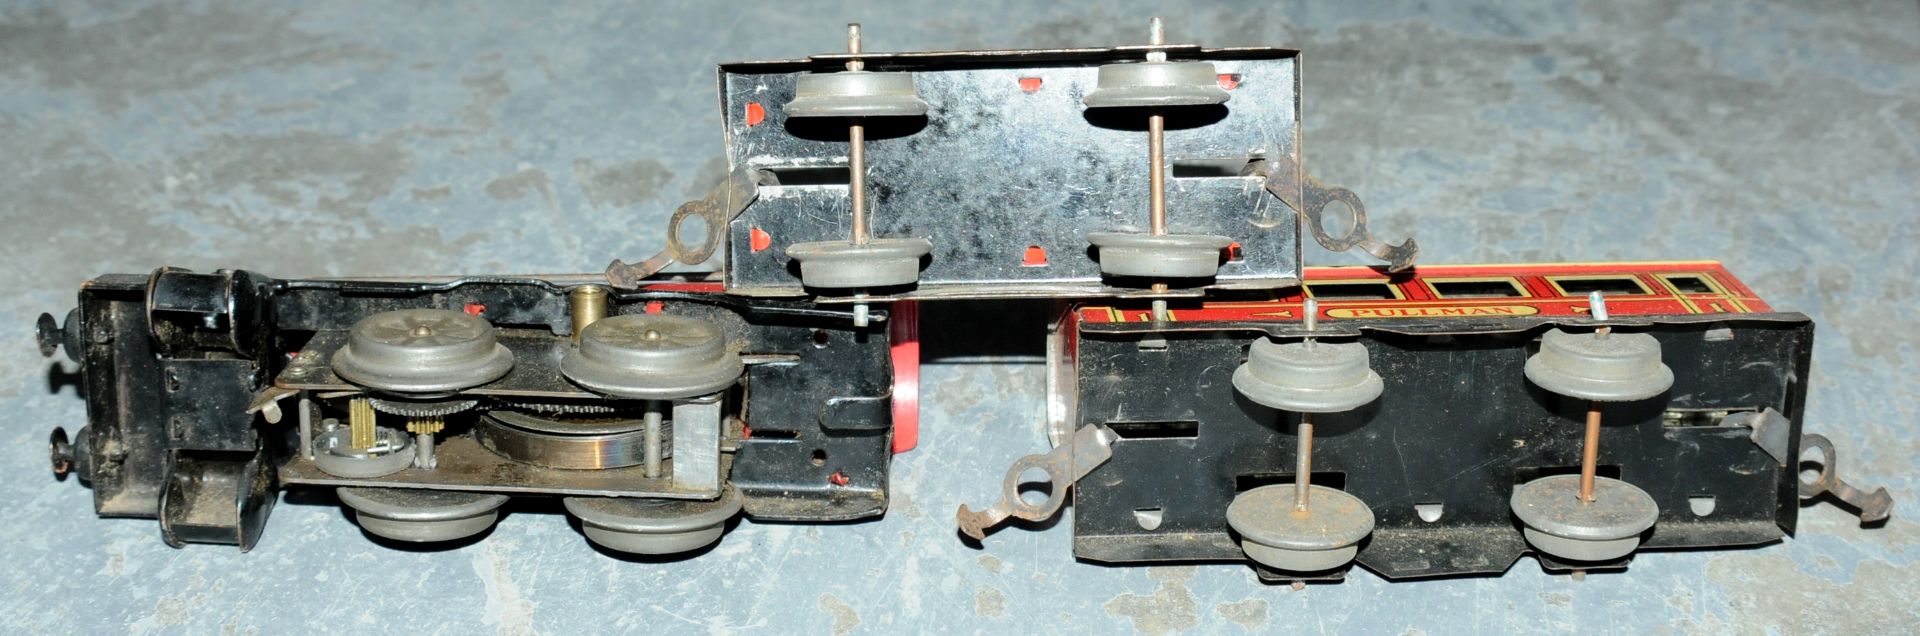 Marx Toys Clockwork Tinplate Trains Set - Image 6 of 6